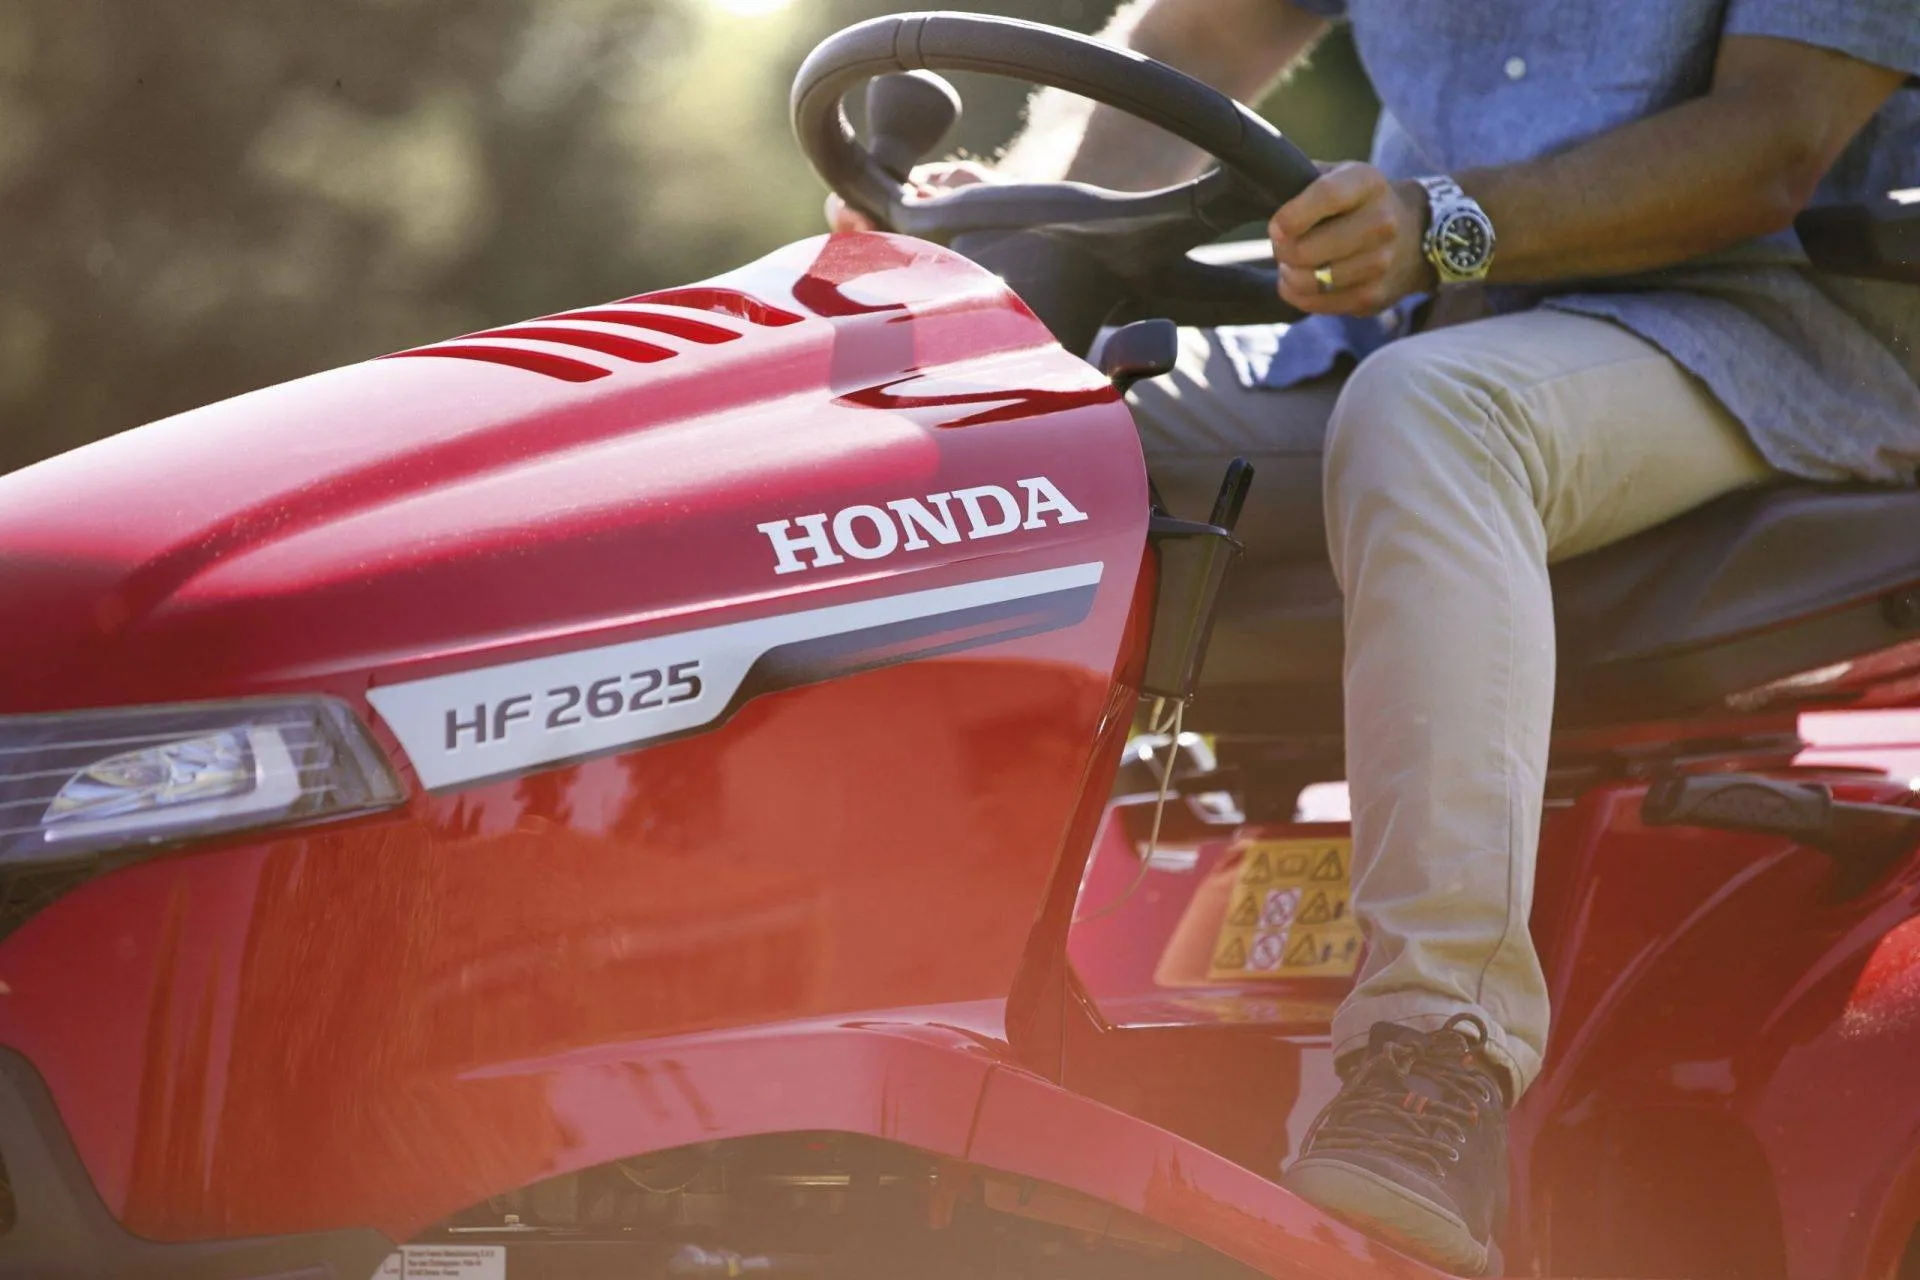 Honda HF2625 HME Ride-On Lawnmower